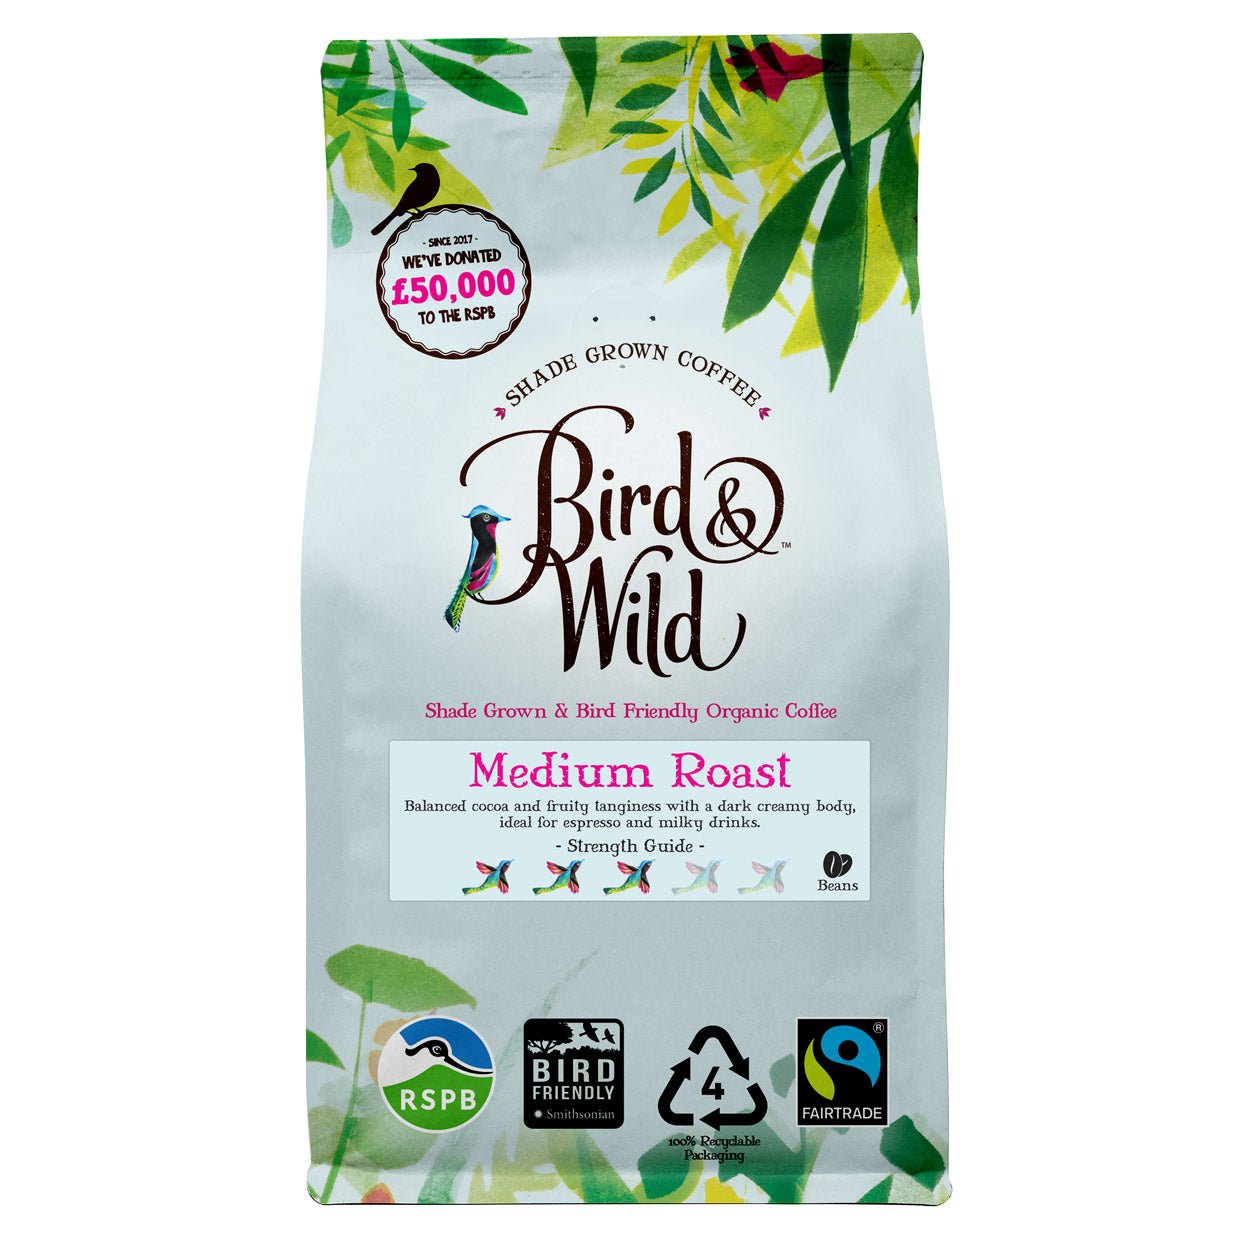 Medium Roast Coffee - 6 x 200g Bags - Beans or Ground - Bird & Wild Coffee